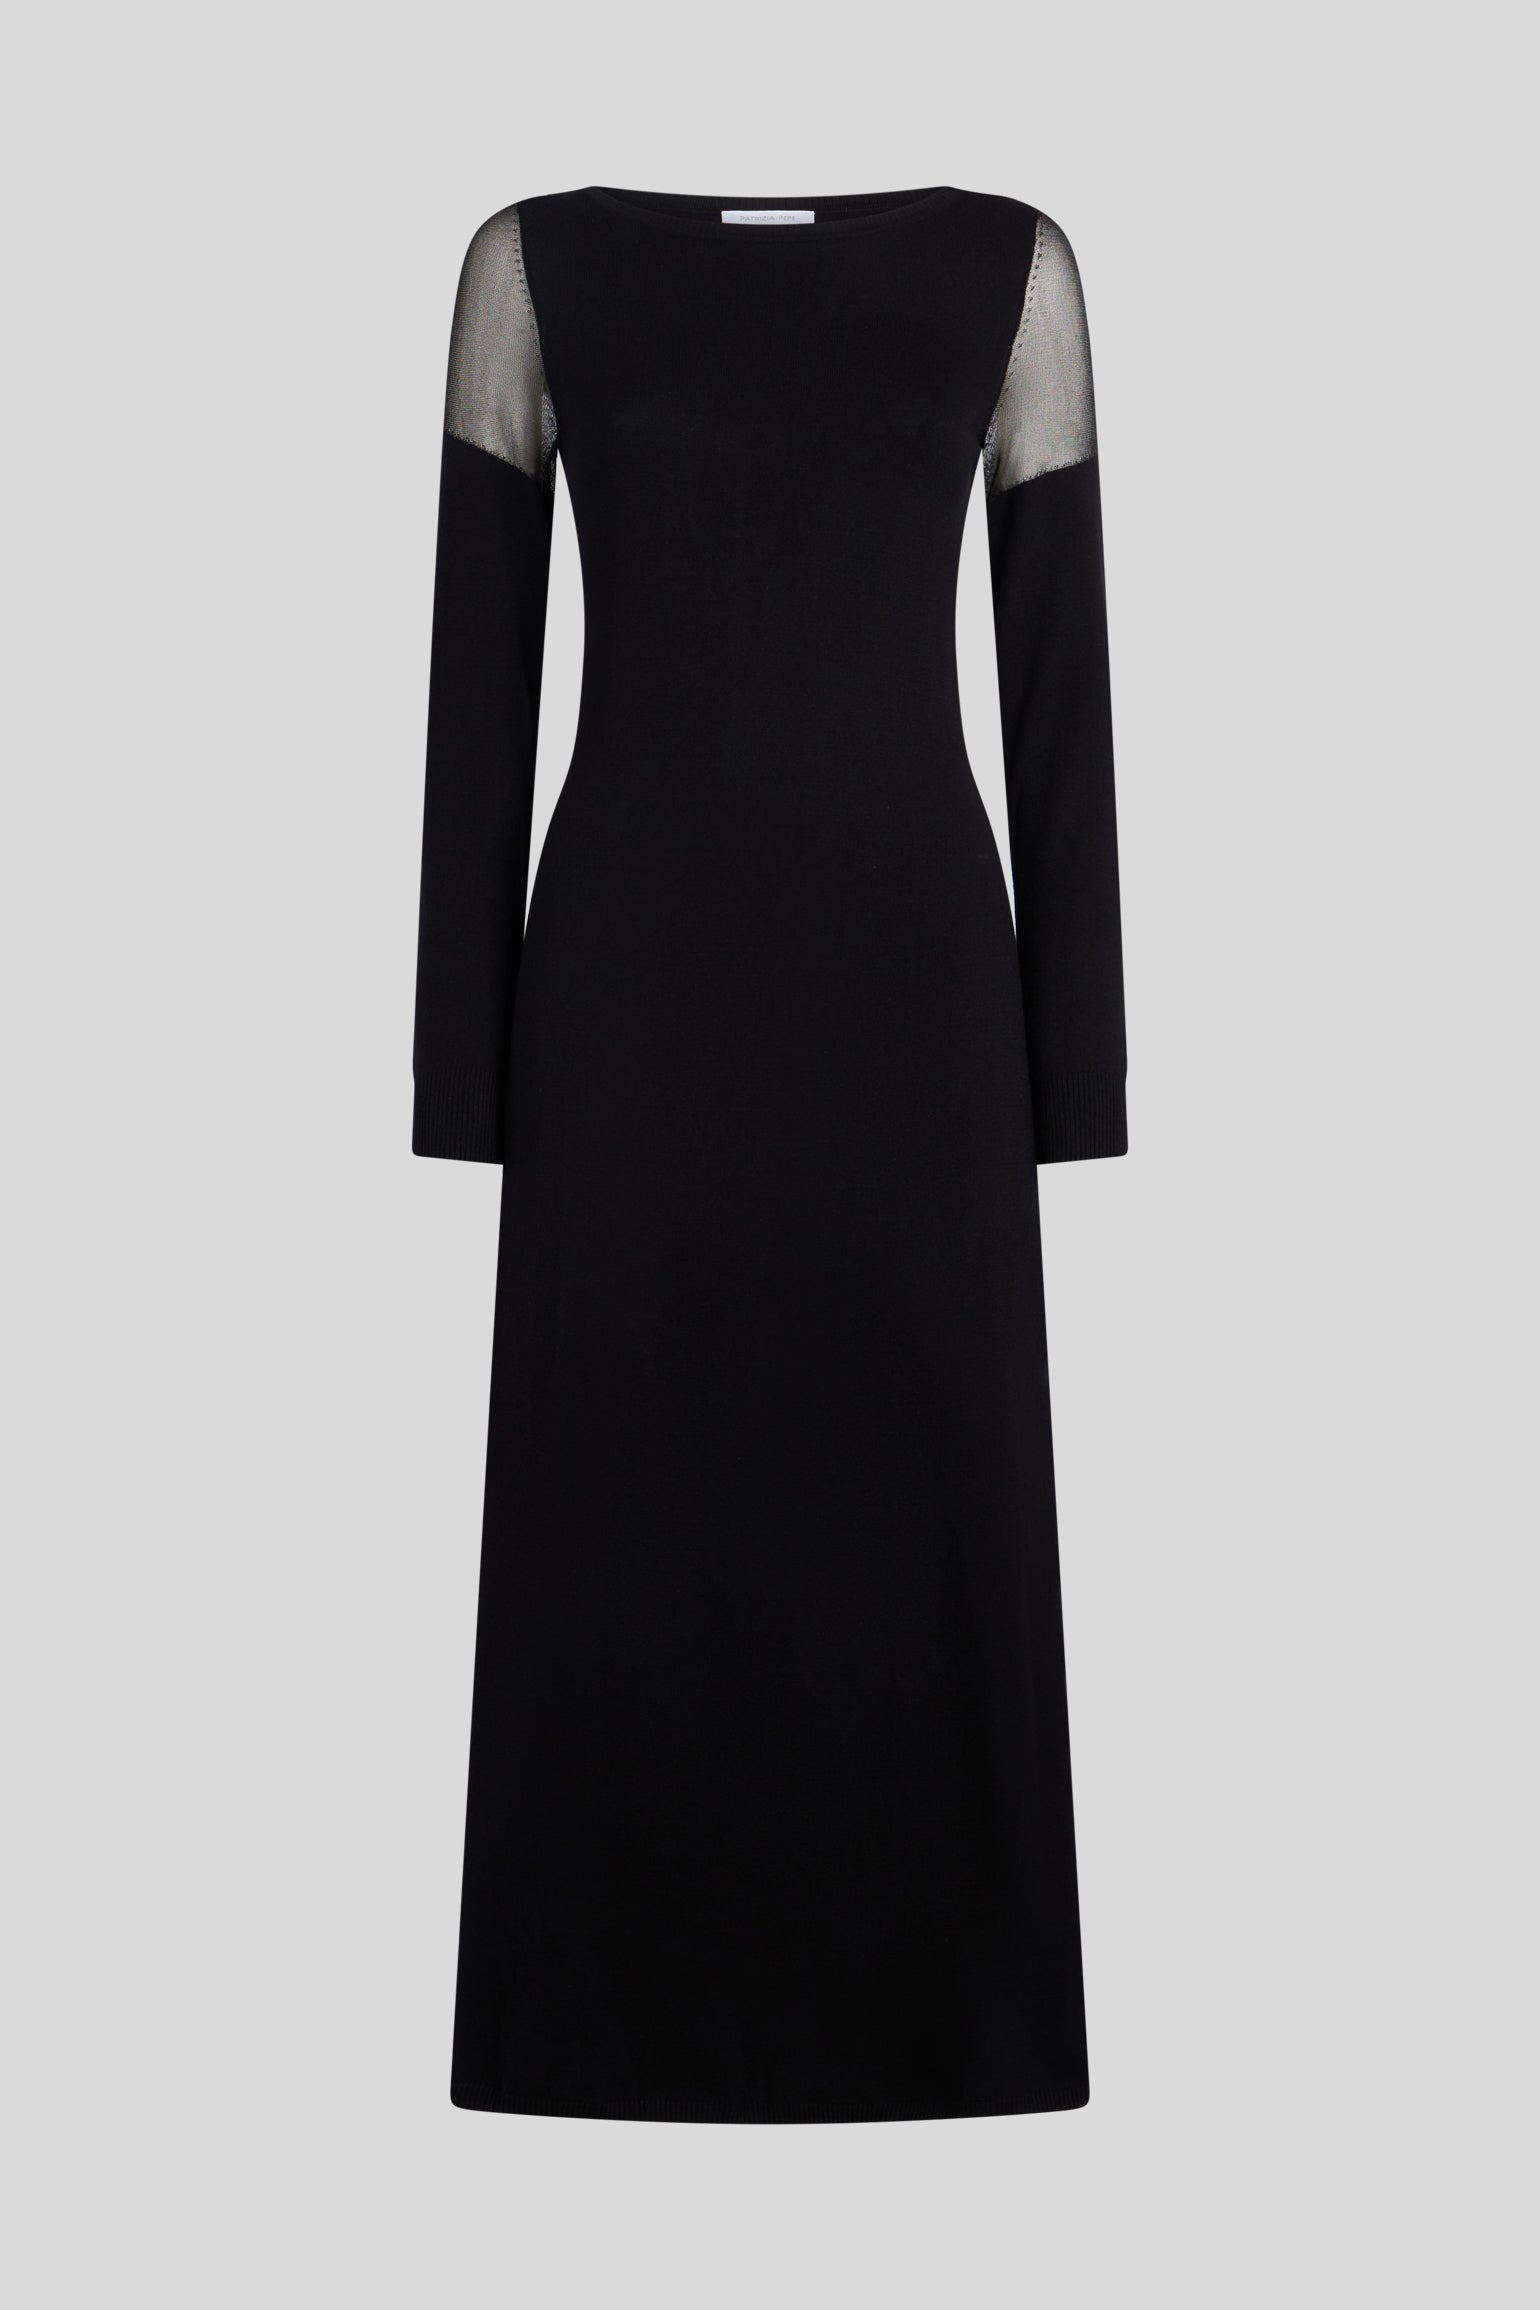 PATRIZIA PEPE Black Midi Dress with Transparencies